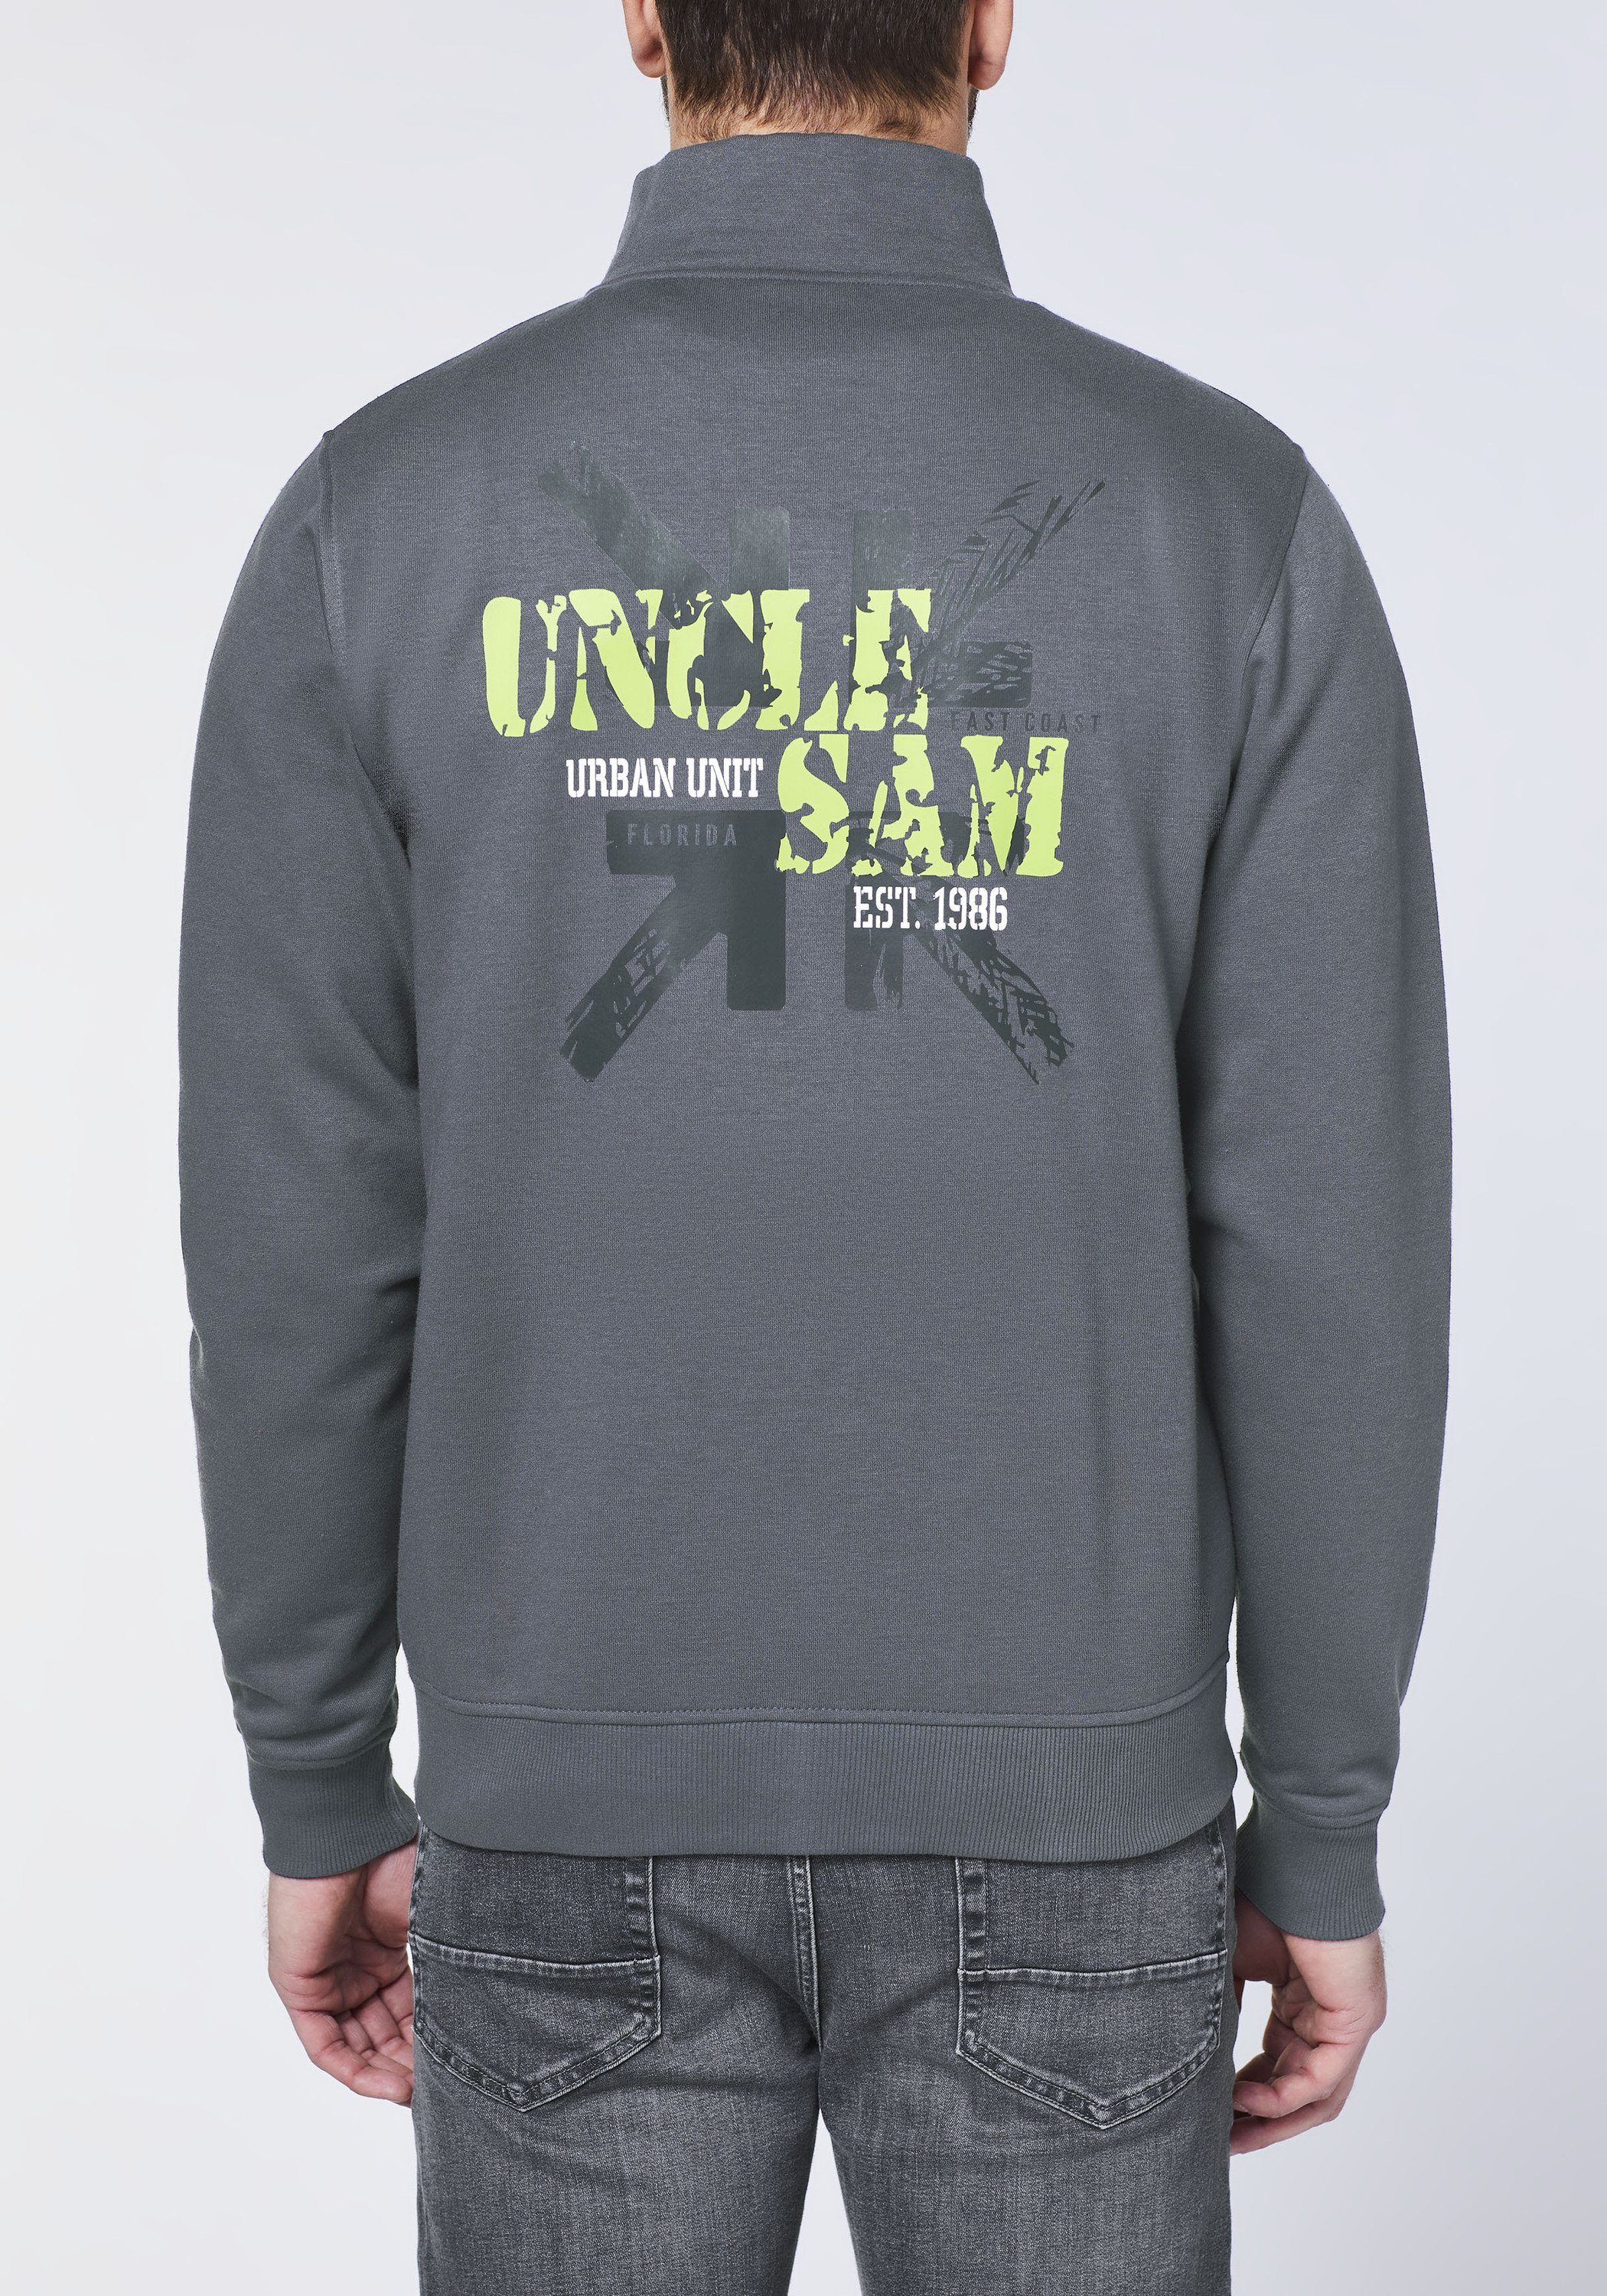 Label-Print rückseitigem Sam Uncle mit Sweatjacke